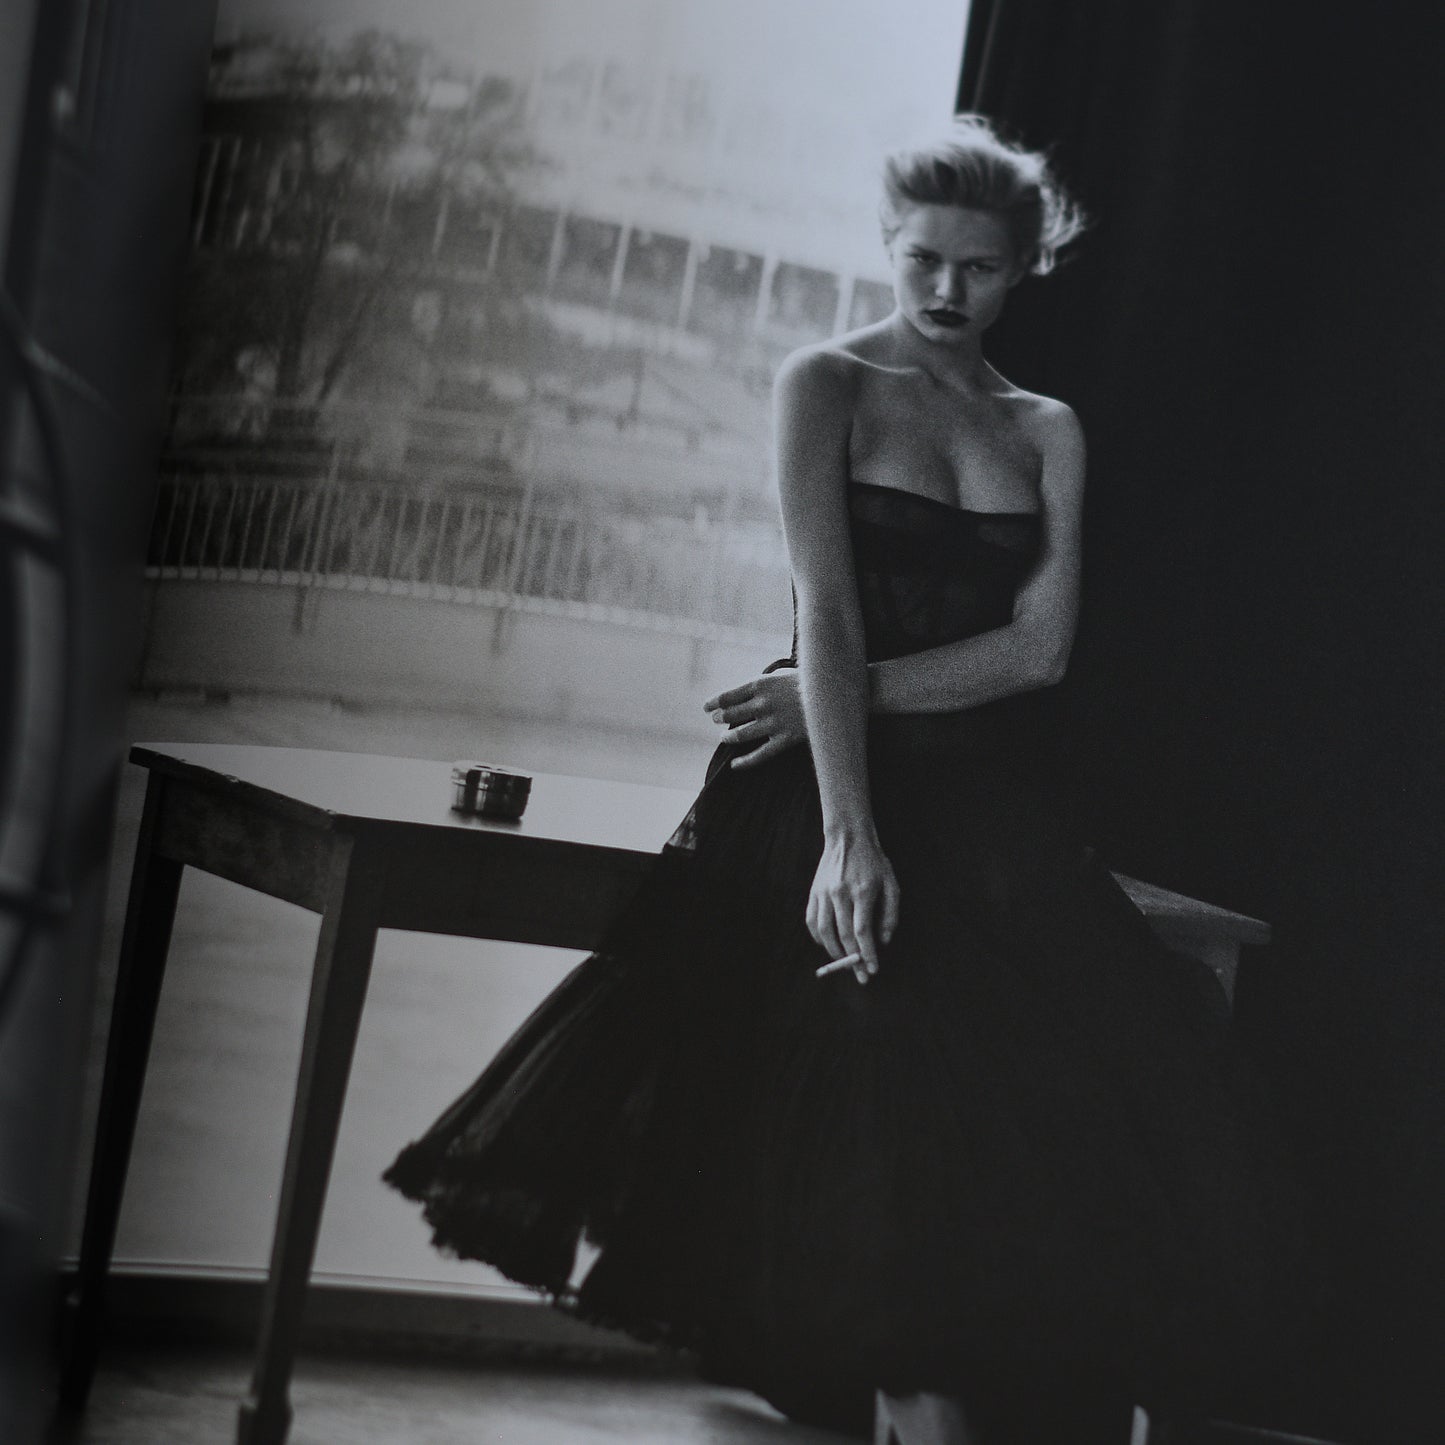 On Fashion Photography - Peter Lindbergh